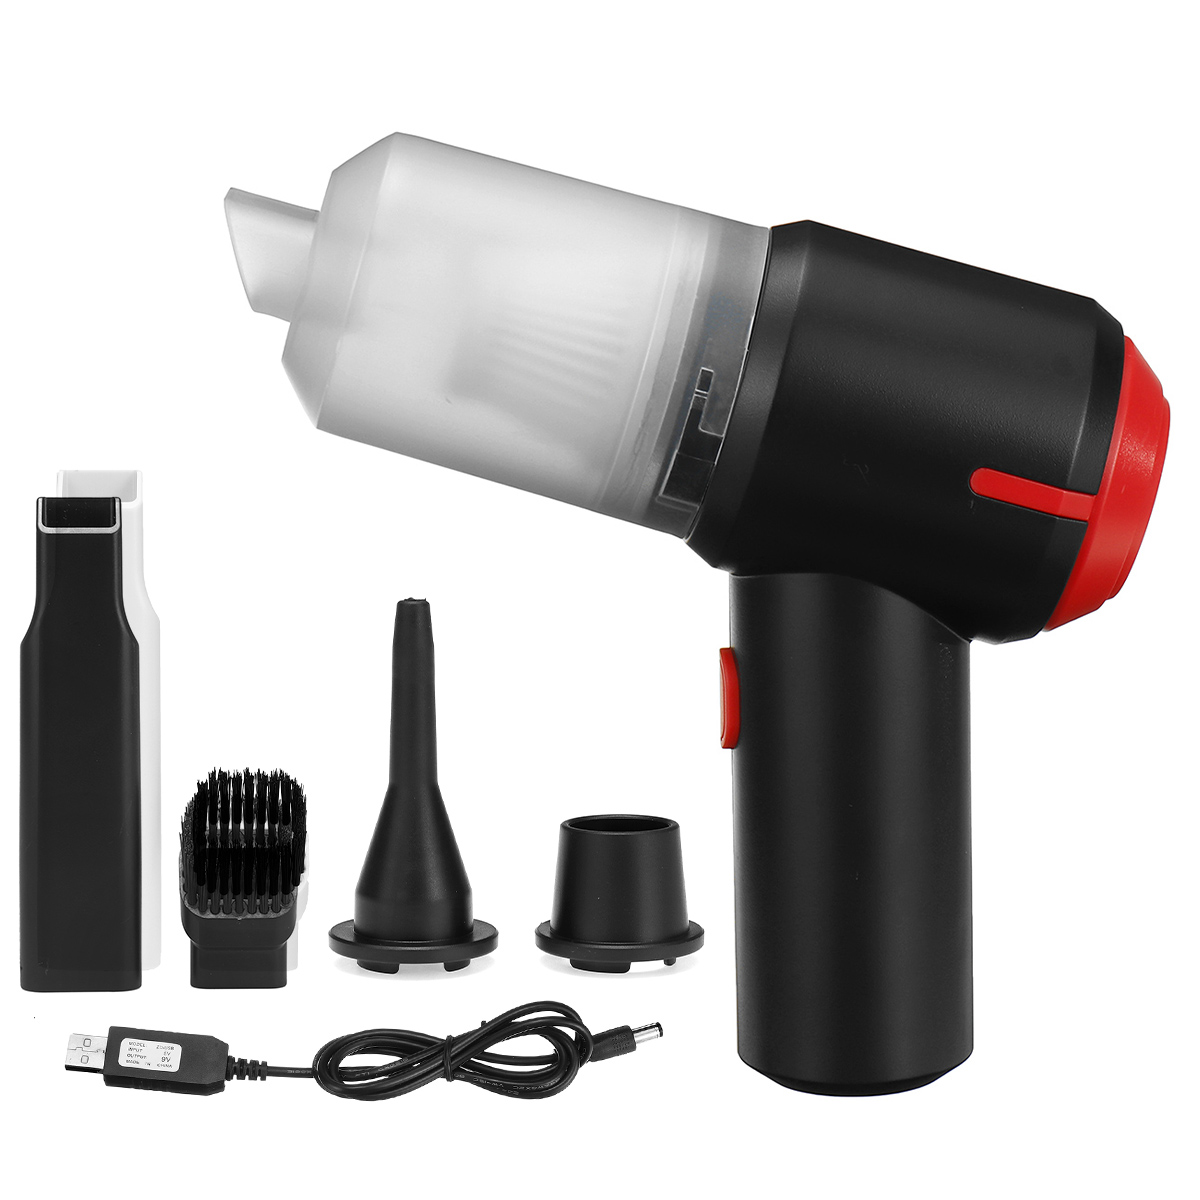 3-in-1 Portable Cordless Vacuum Blower Cleaner Handheld Vaccum Cleaner Black Colour